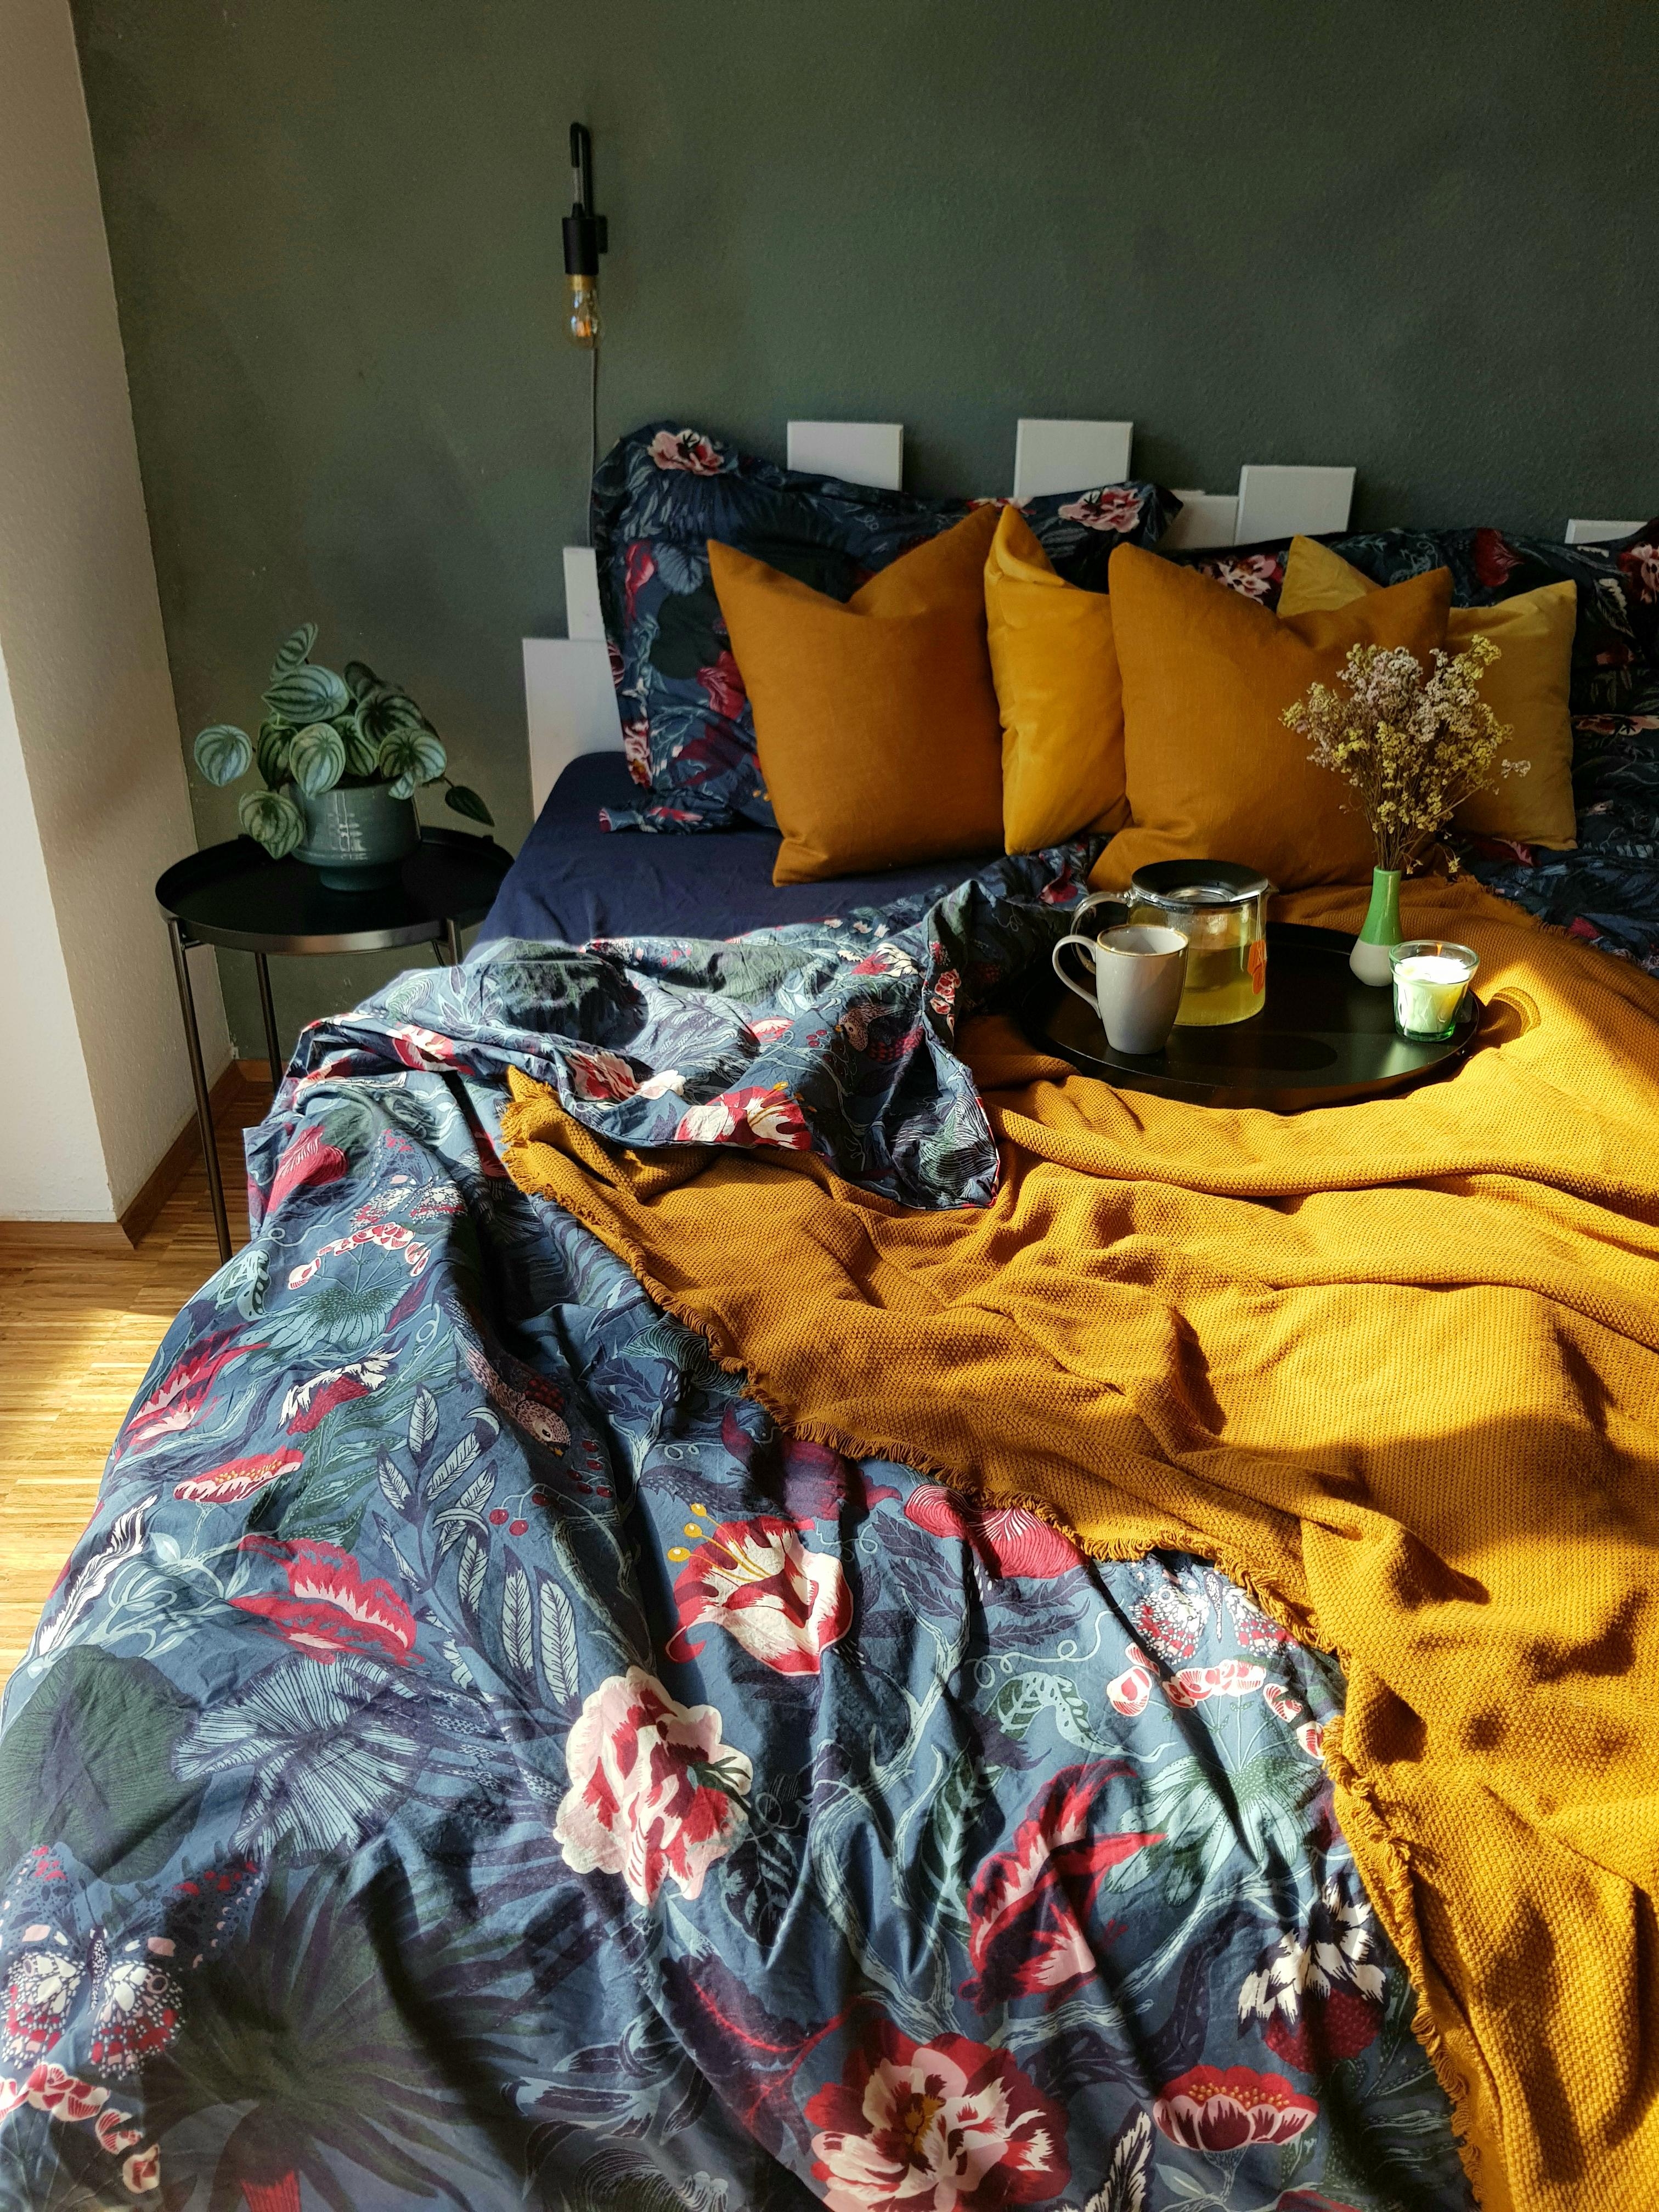 Ich liebe diese Farbkombi 
#bedroominspo#mybdrm